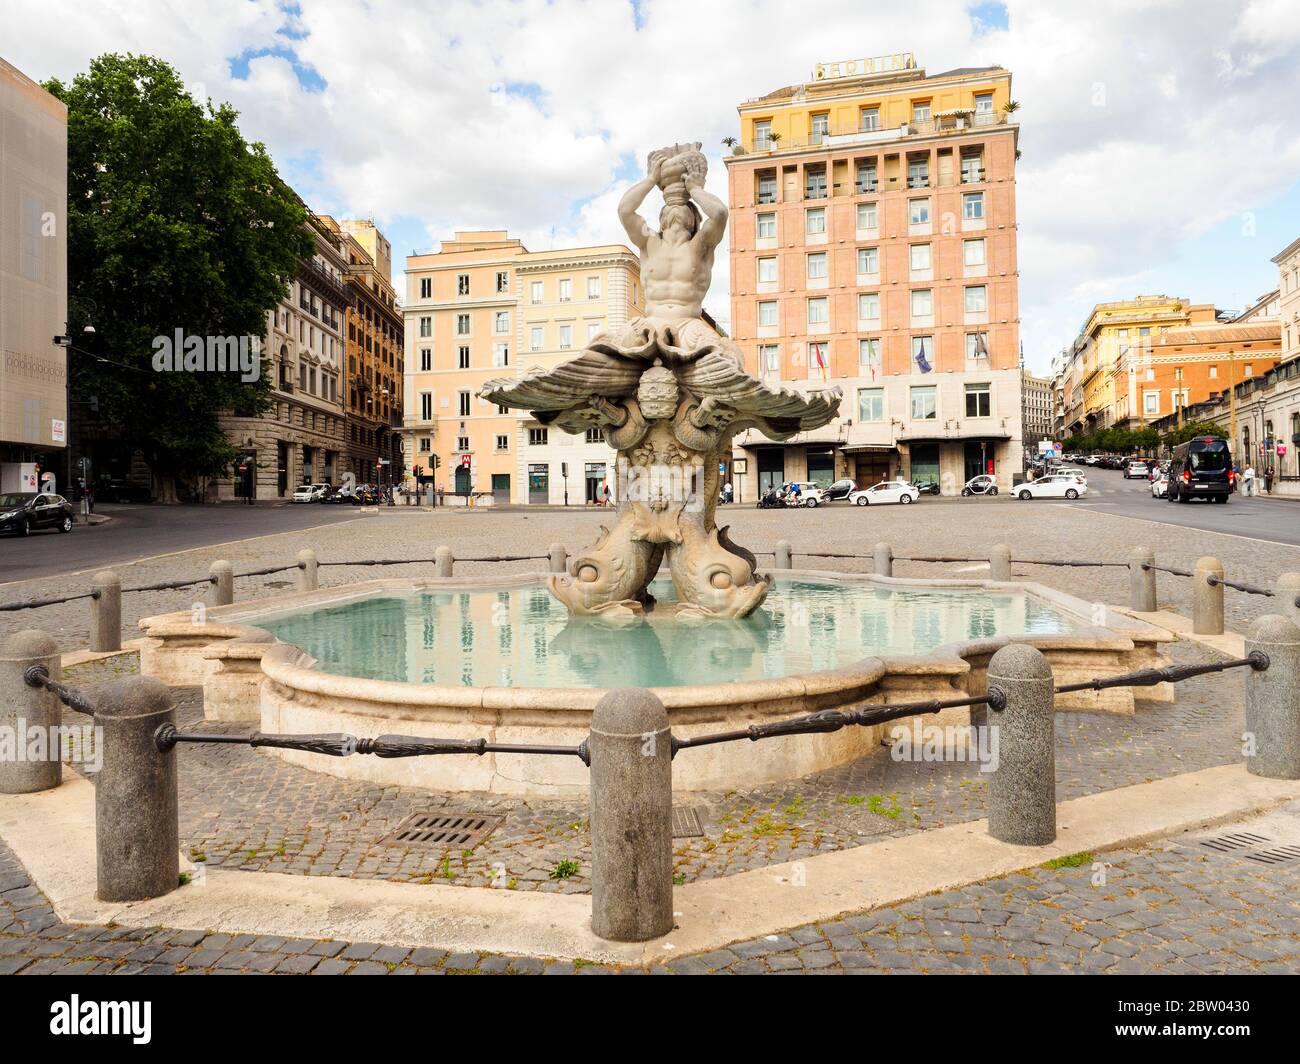 Fontana del Tritone (Triton Fountain) by Gian Lorenzo Bernini - Rome, Italy Stock Photo